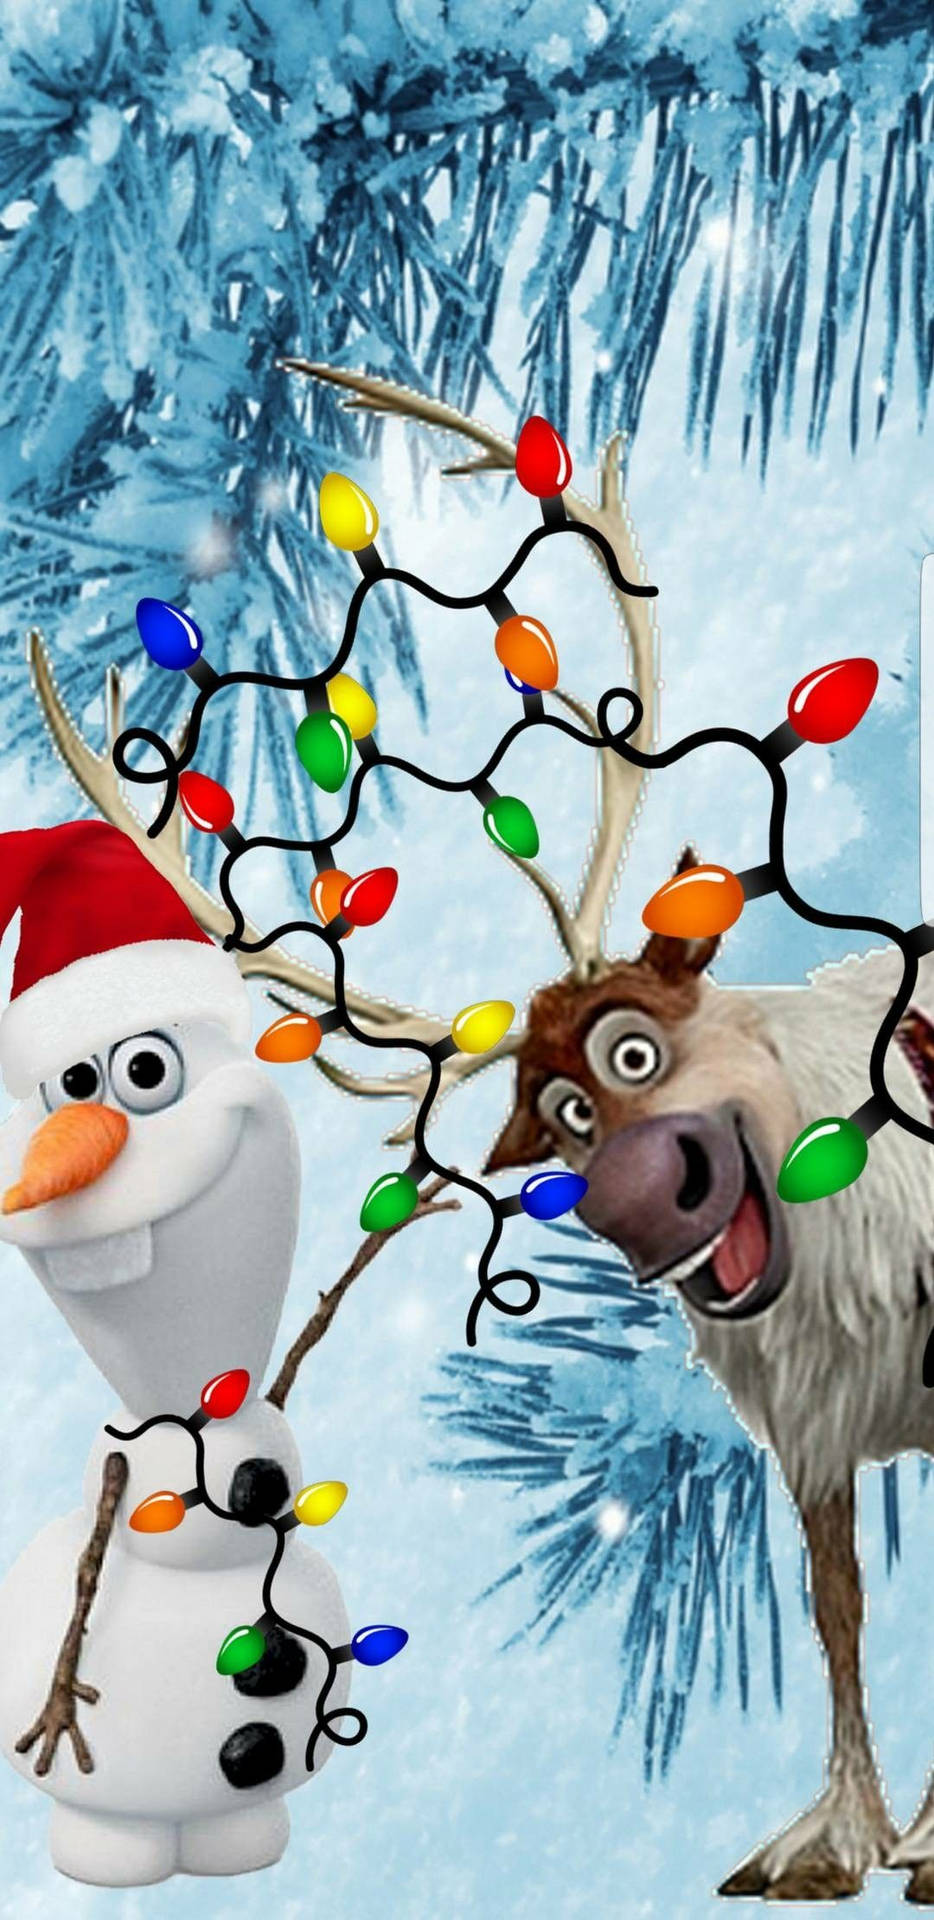 Disney Christmas iPhone Olaf And Sven Wallpaper